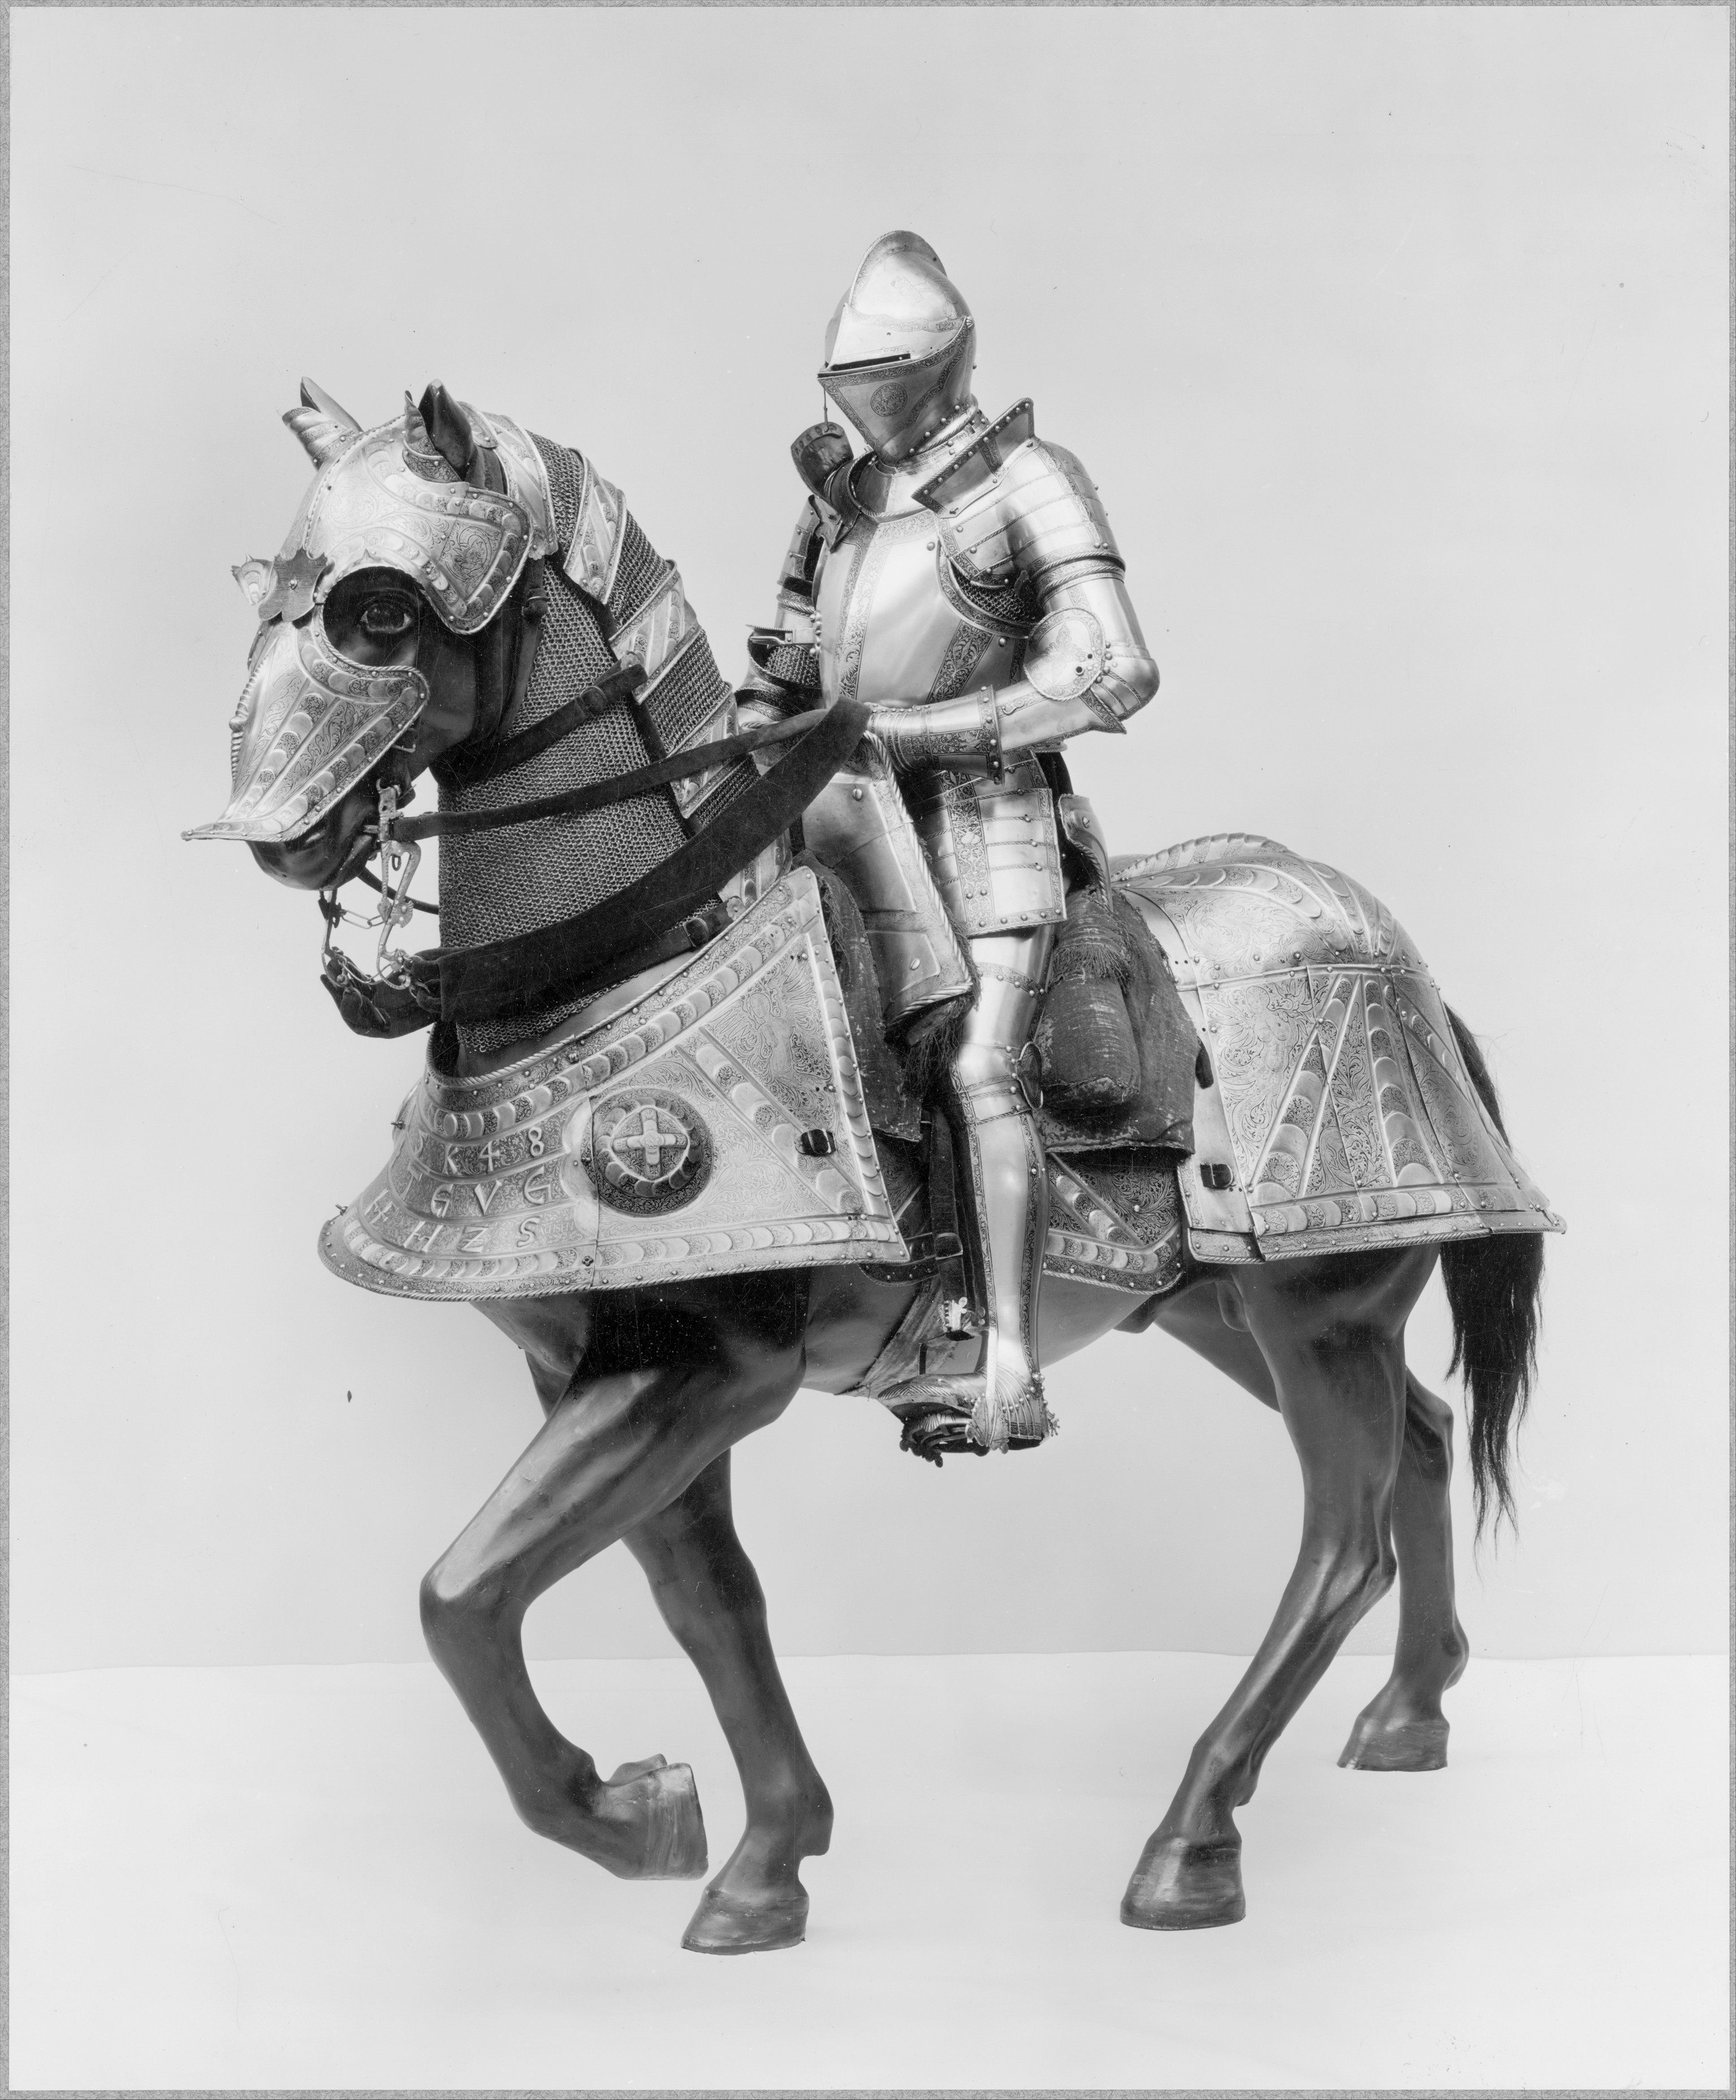 General 3070x3713 armor knight european armet cuirass gauntlets greaves spear horse medieval museum men portrait display noise